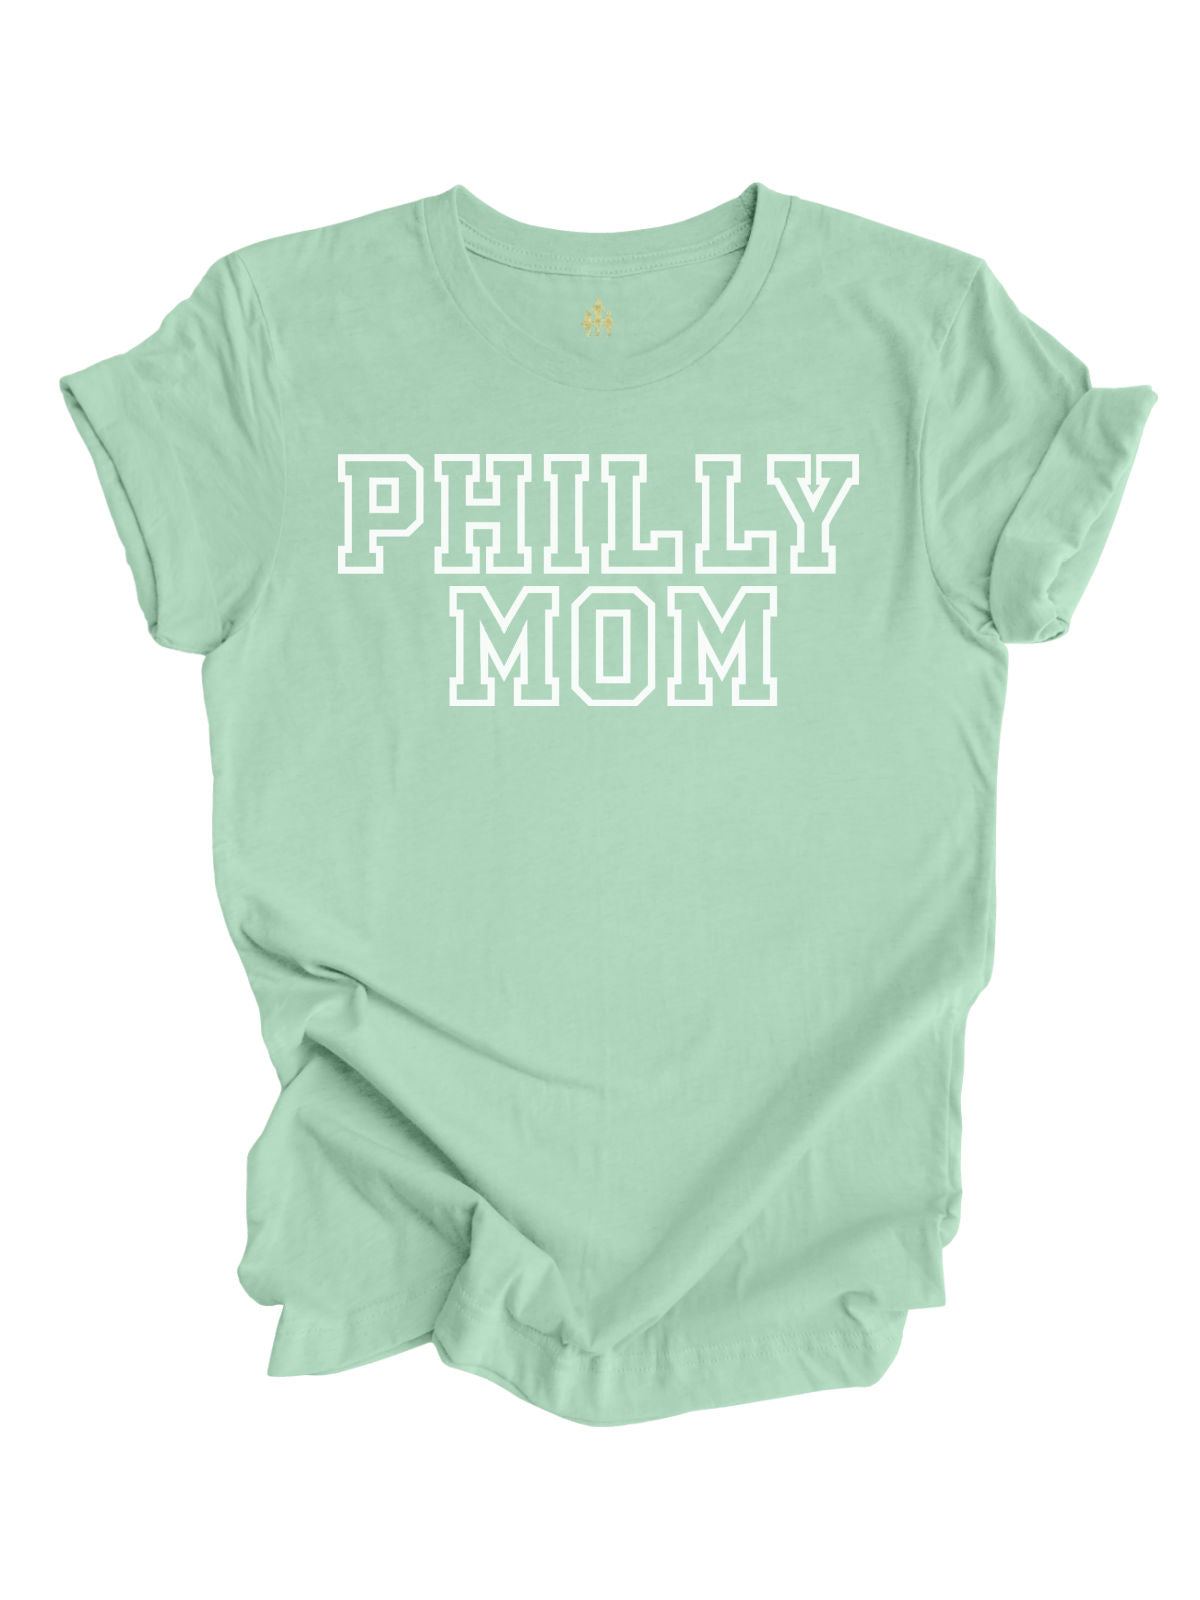 Philly Mom Varsity Shirt in Mint Green